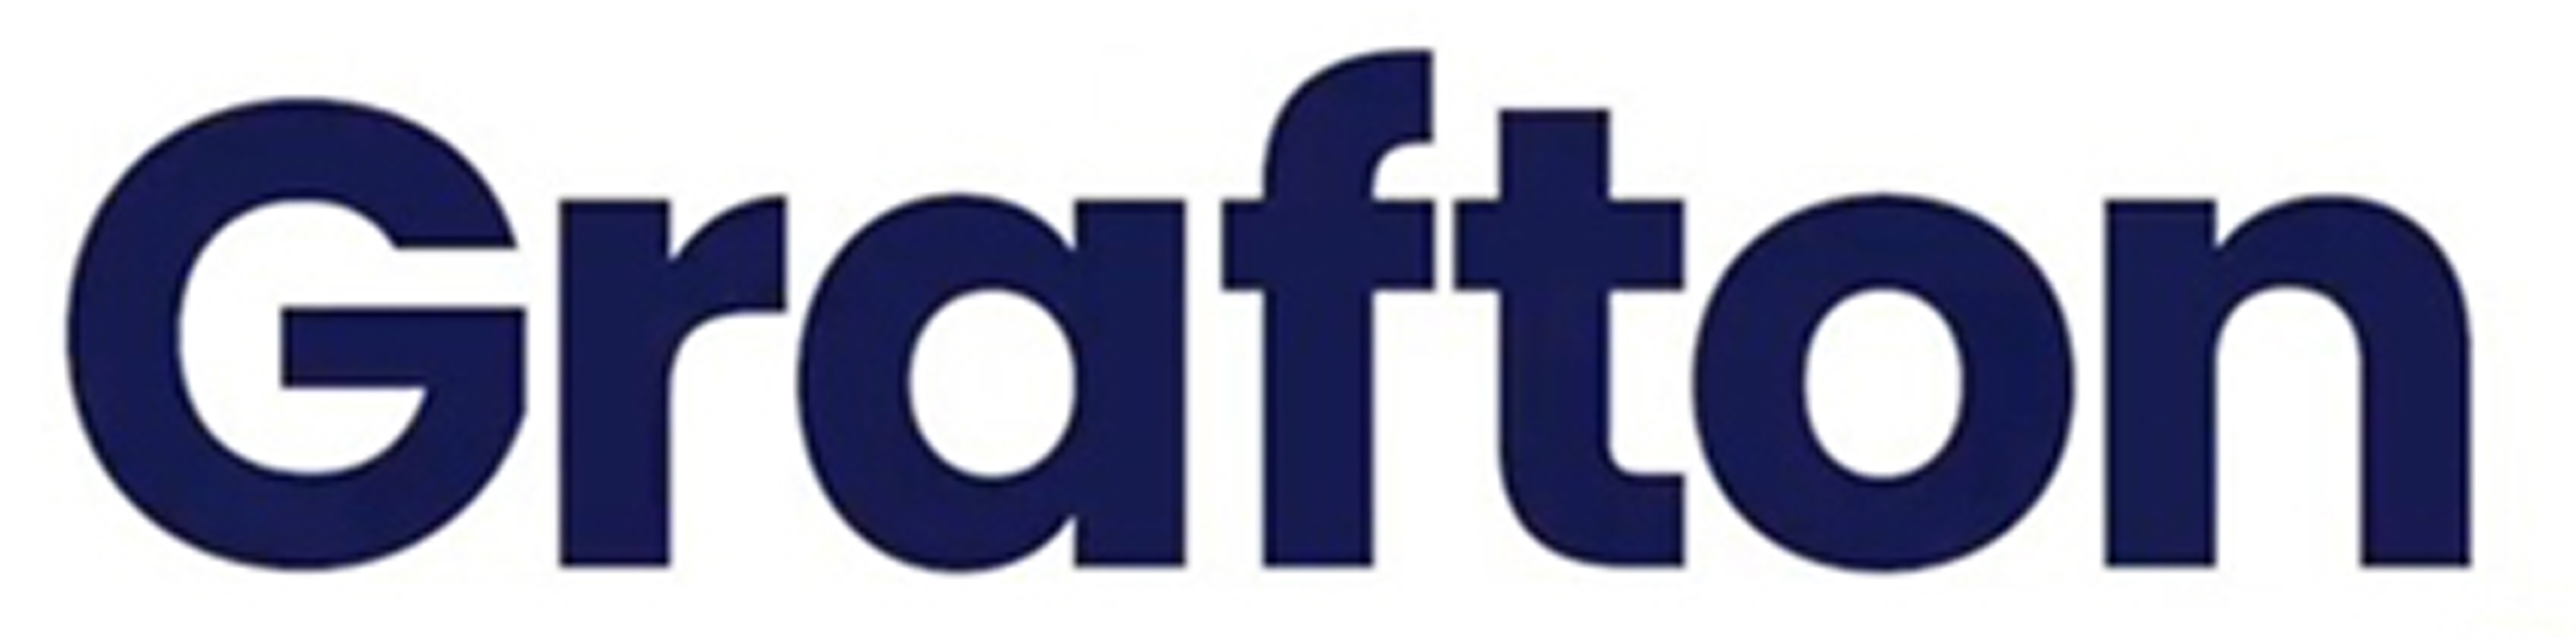 Grafton-logo.jpg